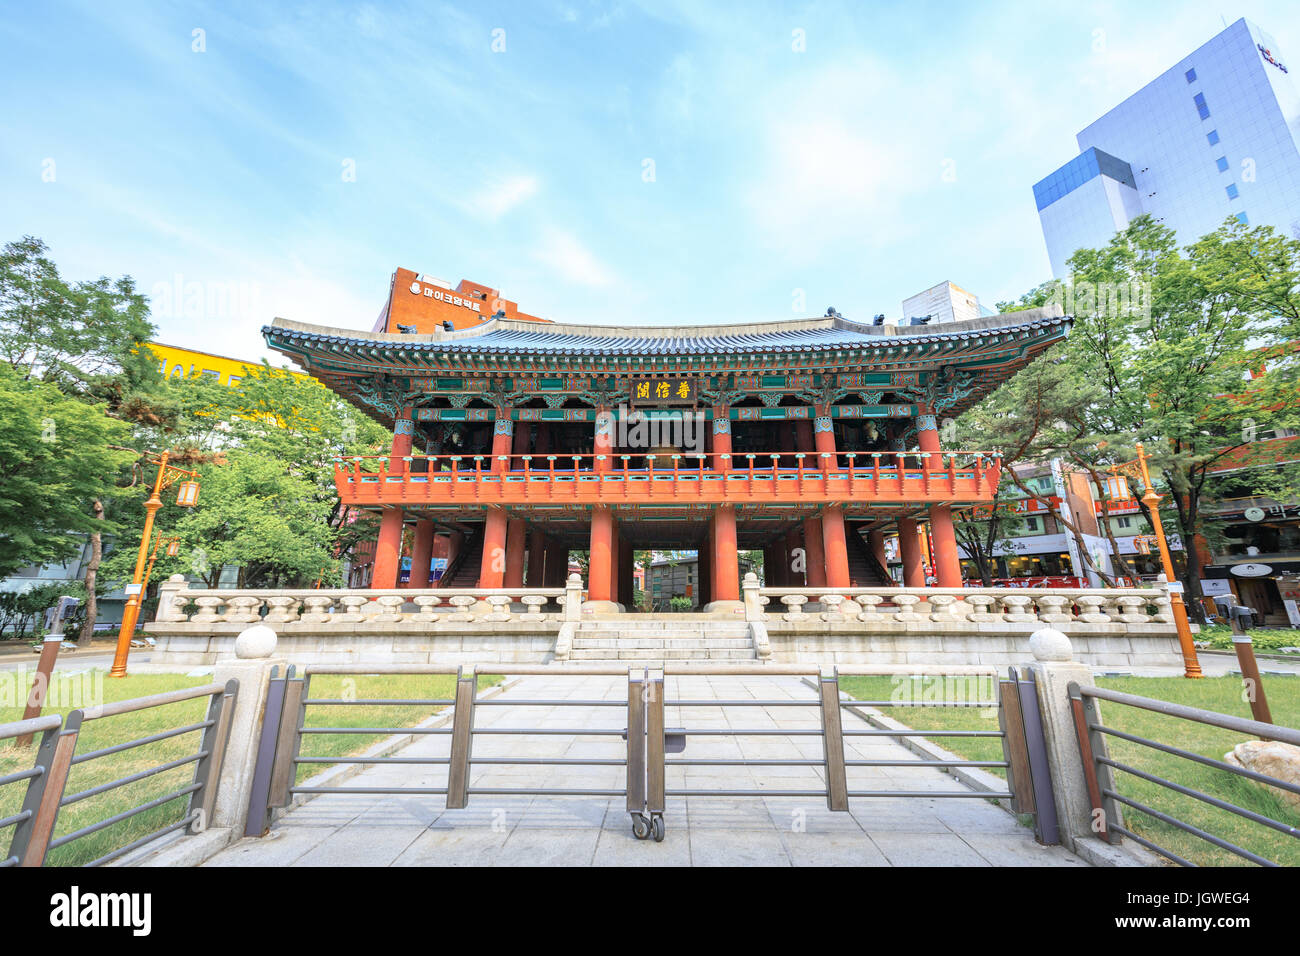 Bosingak Bell Pavillion on Jun 19, 2017 in Seoul, South Korea - Famous landmark Stock Photo